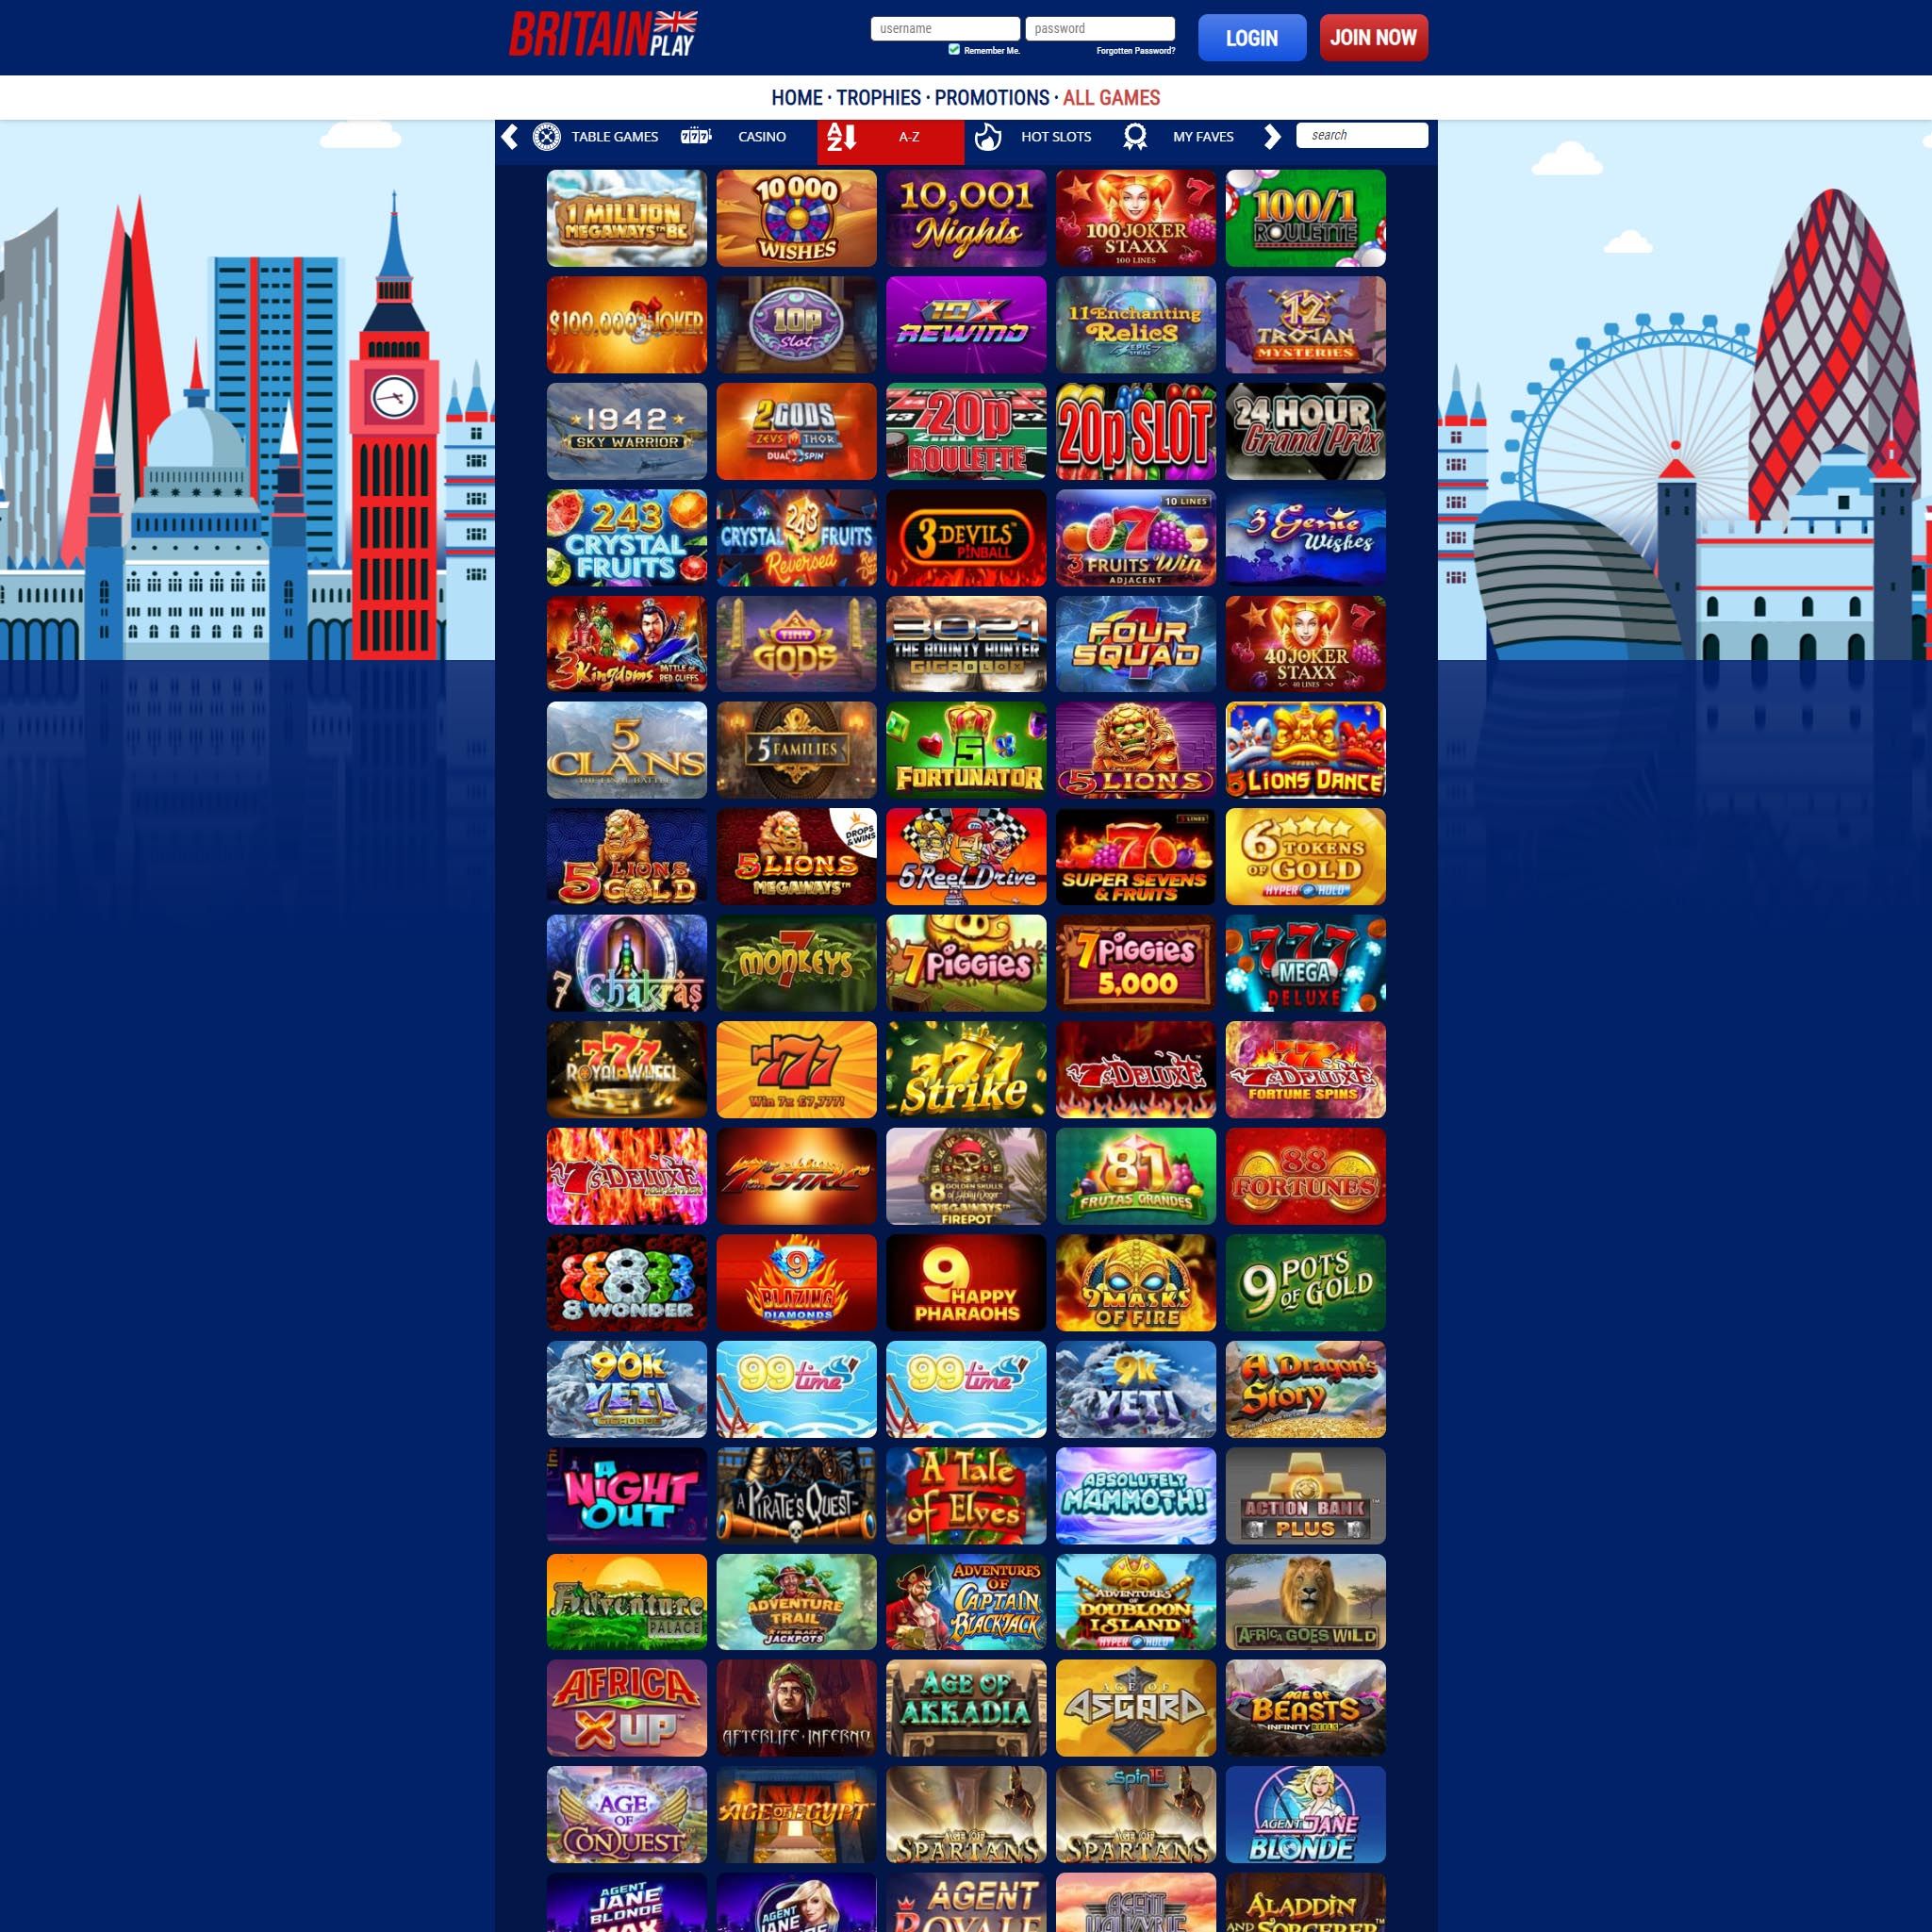 BritainPlay game catalogue